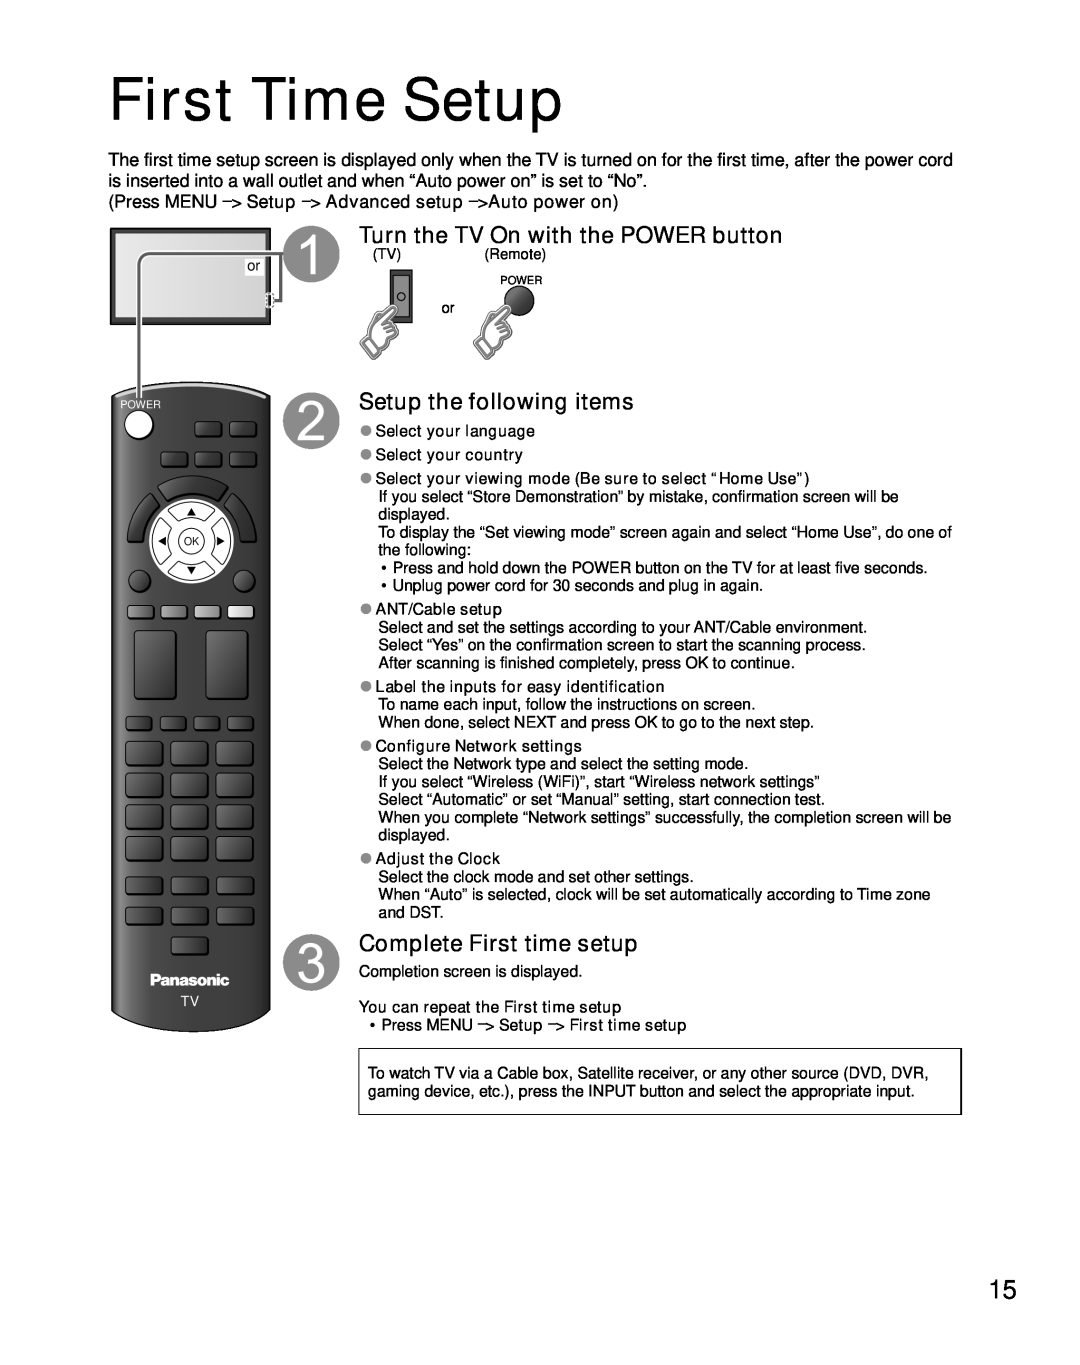 Panasonic Panasonic TC-L47E50, TC-L55ET5 First Time Setup, Turn the TV On with the POWER button, Setup the following items 